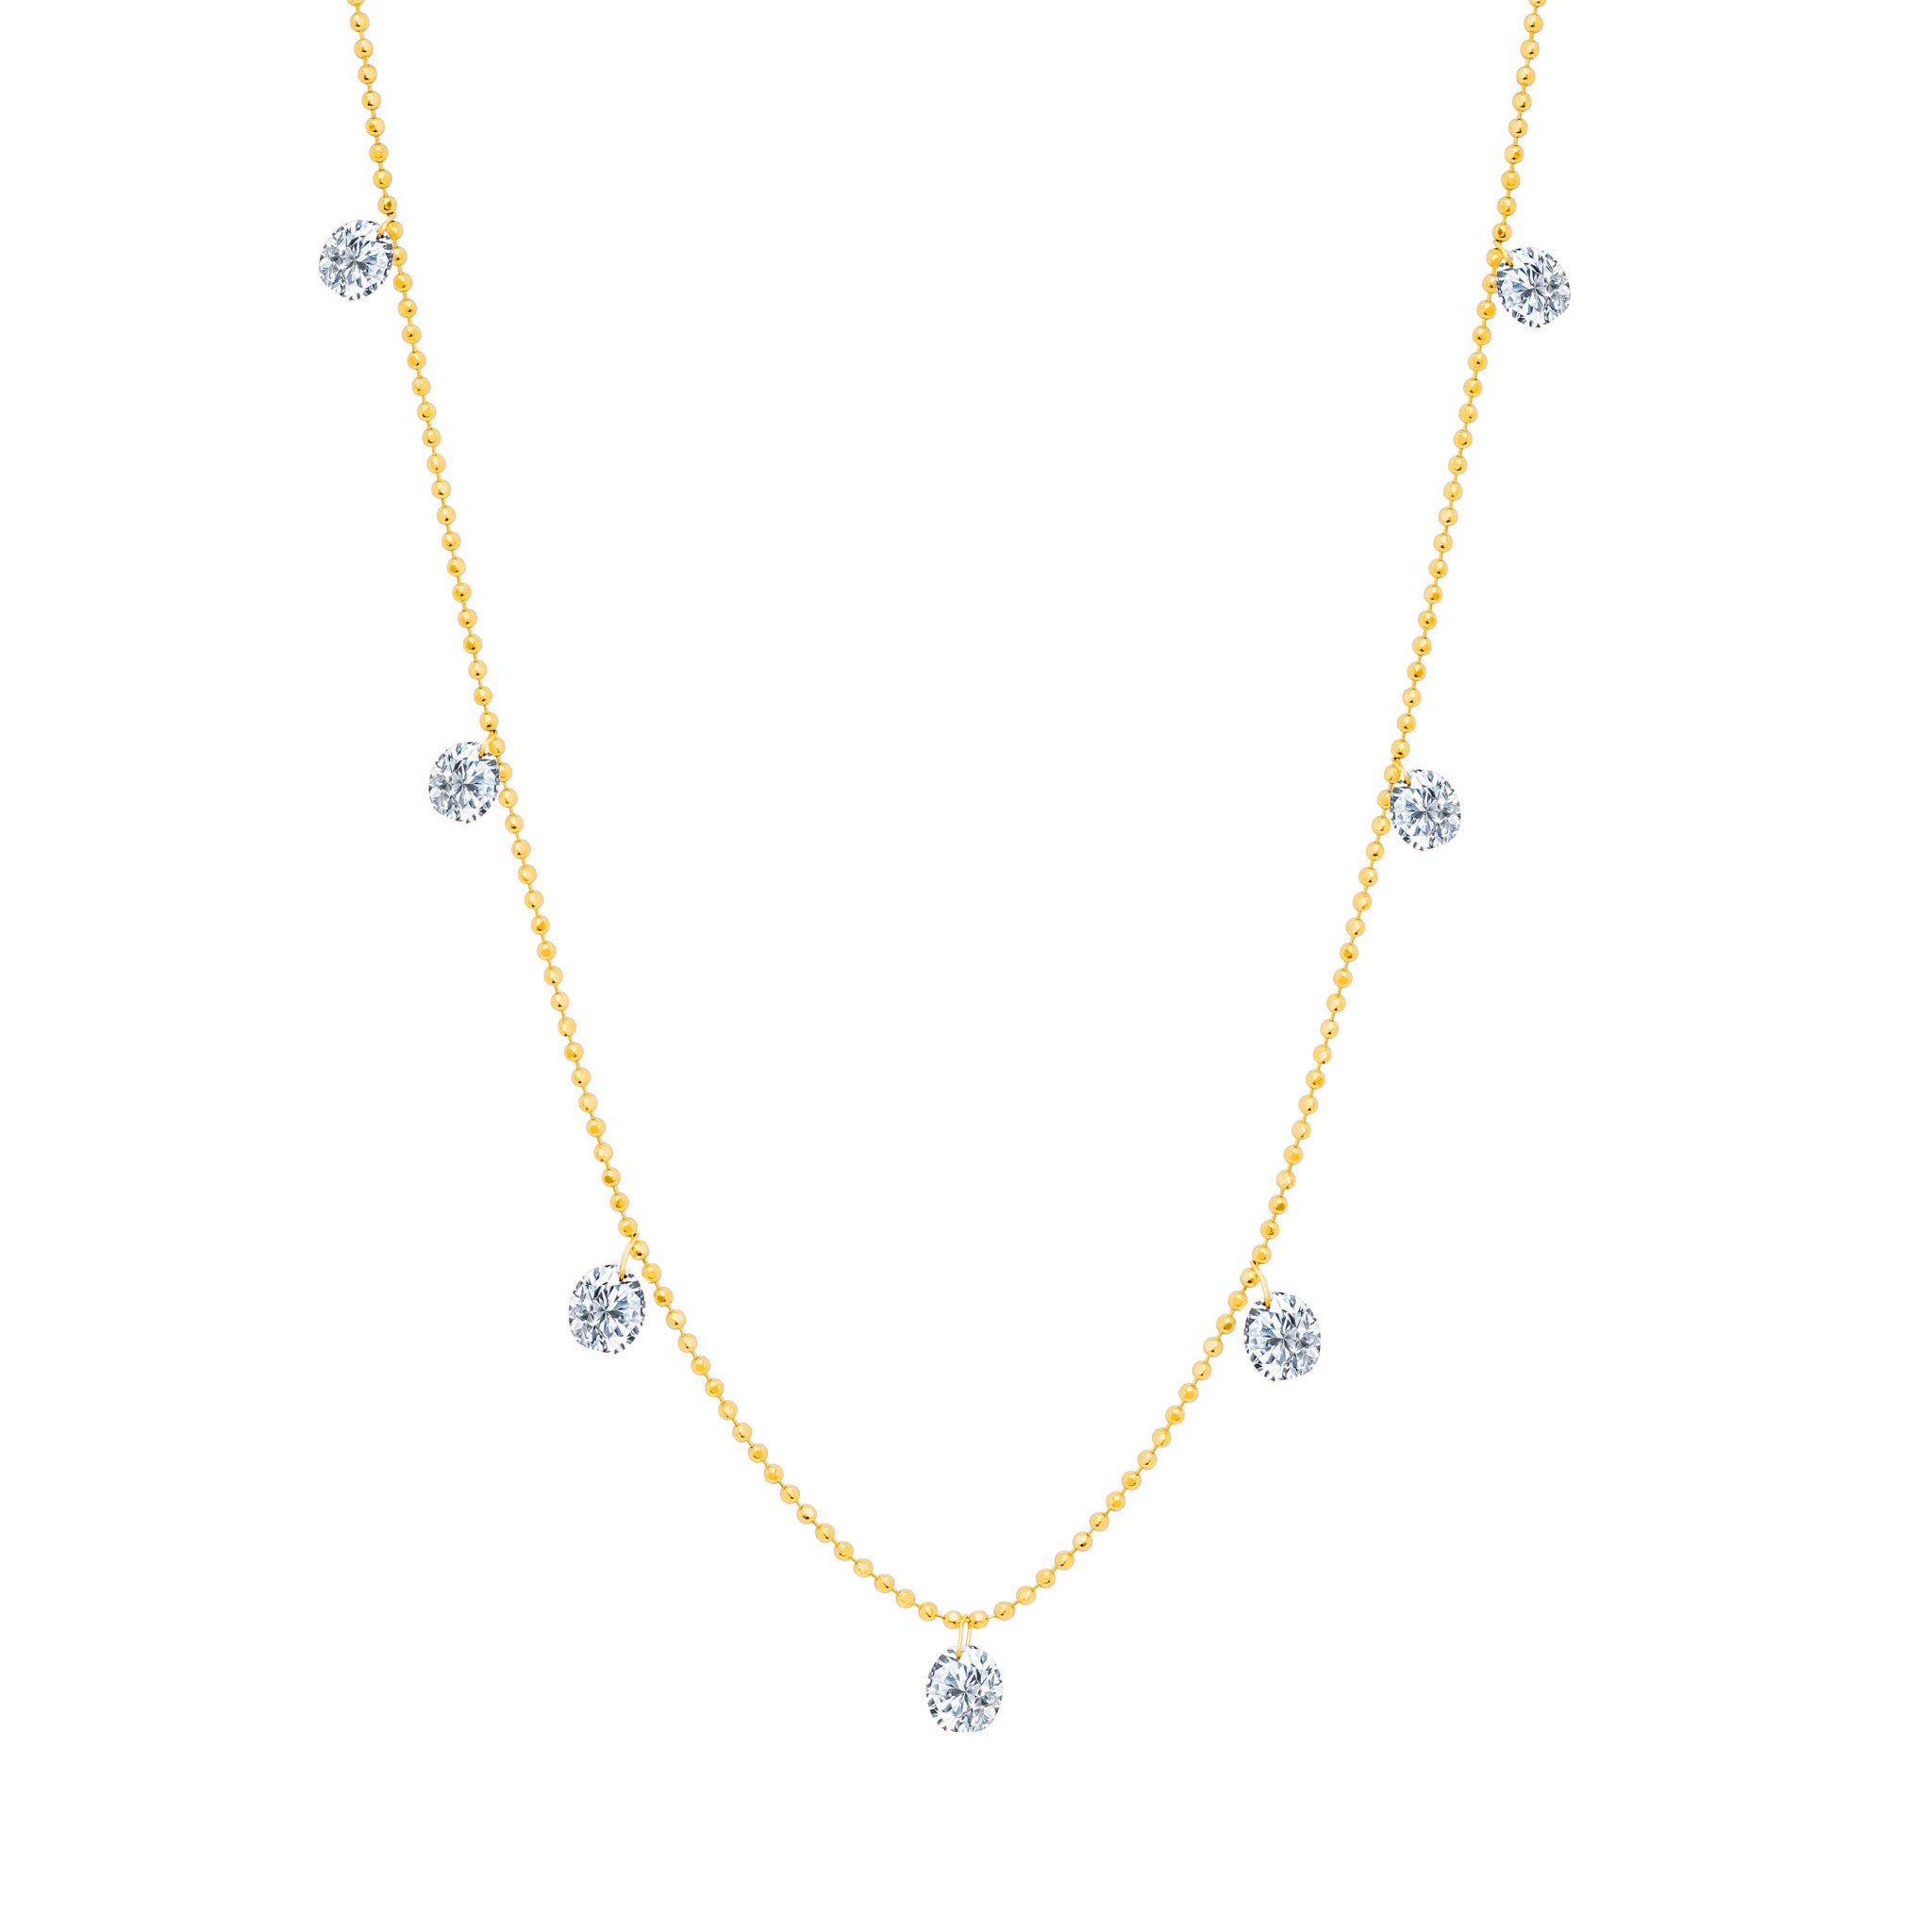 Floating Five Diamond Necklace in White Gold - ROBIN WOOLARD CUSTOM DESIGN